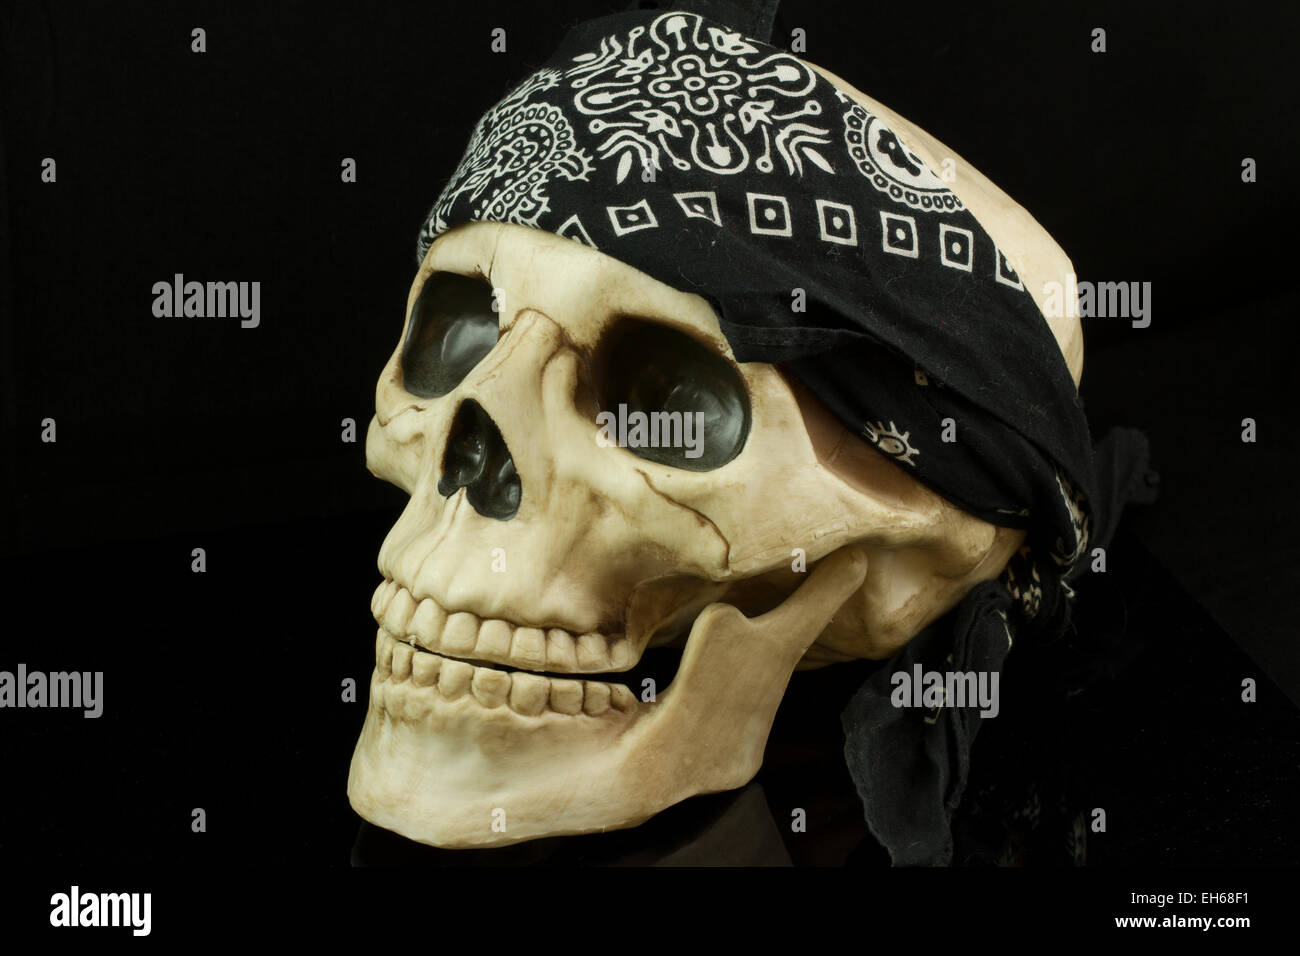 Pirate skull with bandana Stock Photo - Alamy